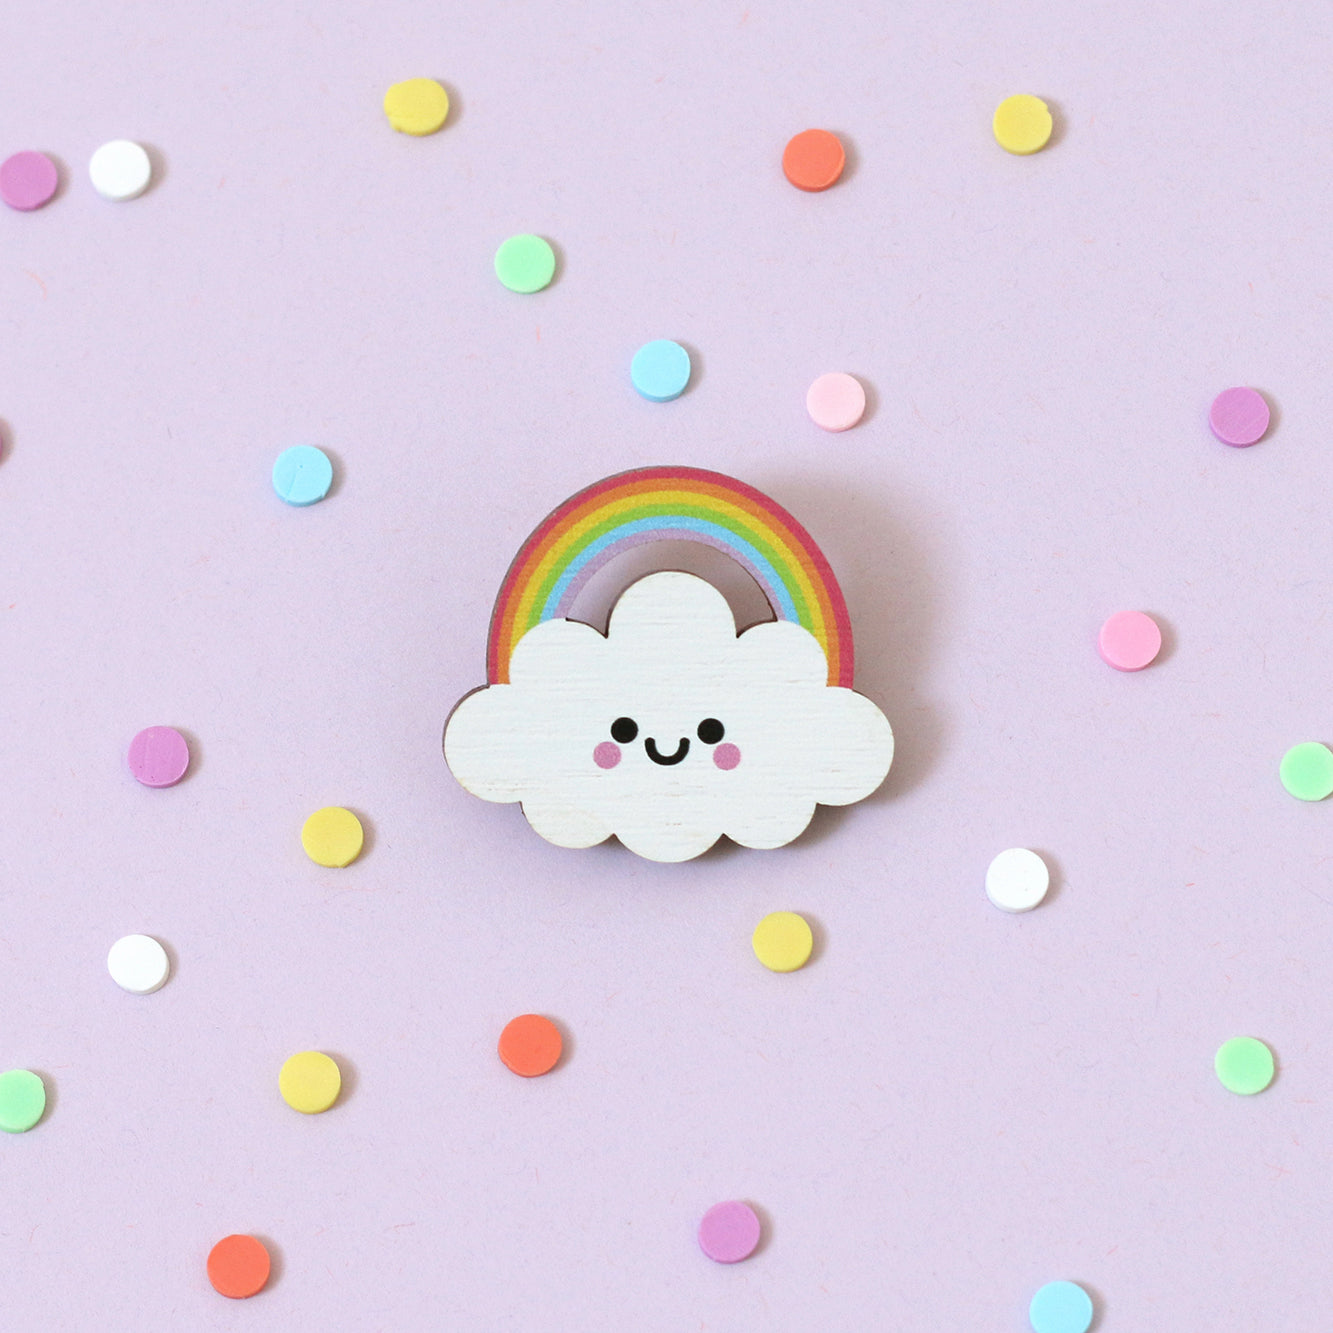 Rainbow Cloud Wooden Pin Badge - Pastel Rainbow